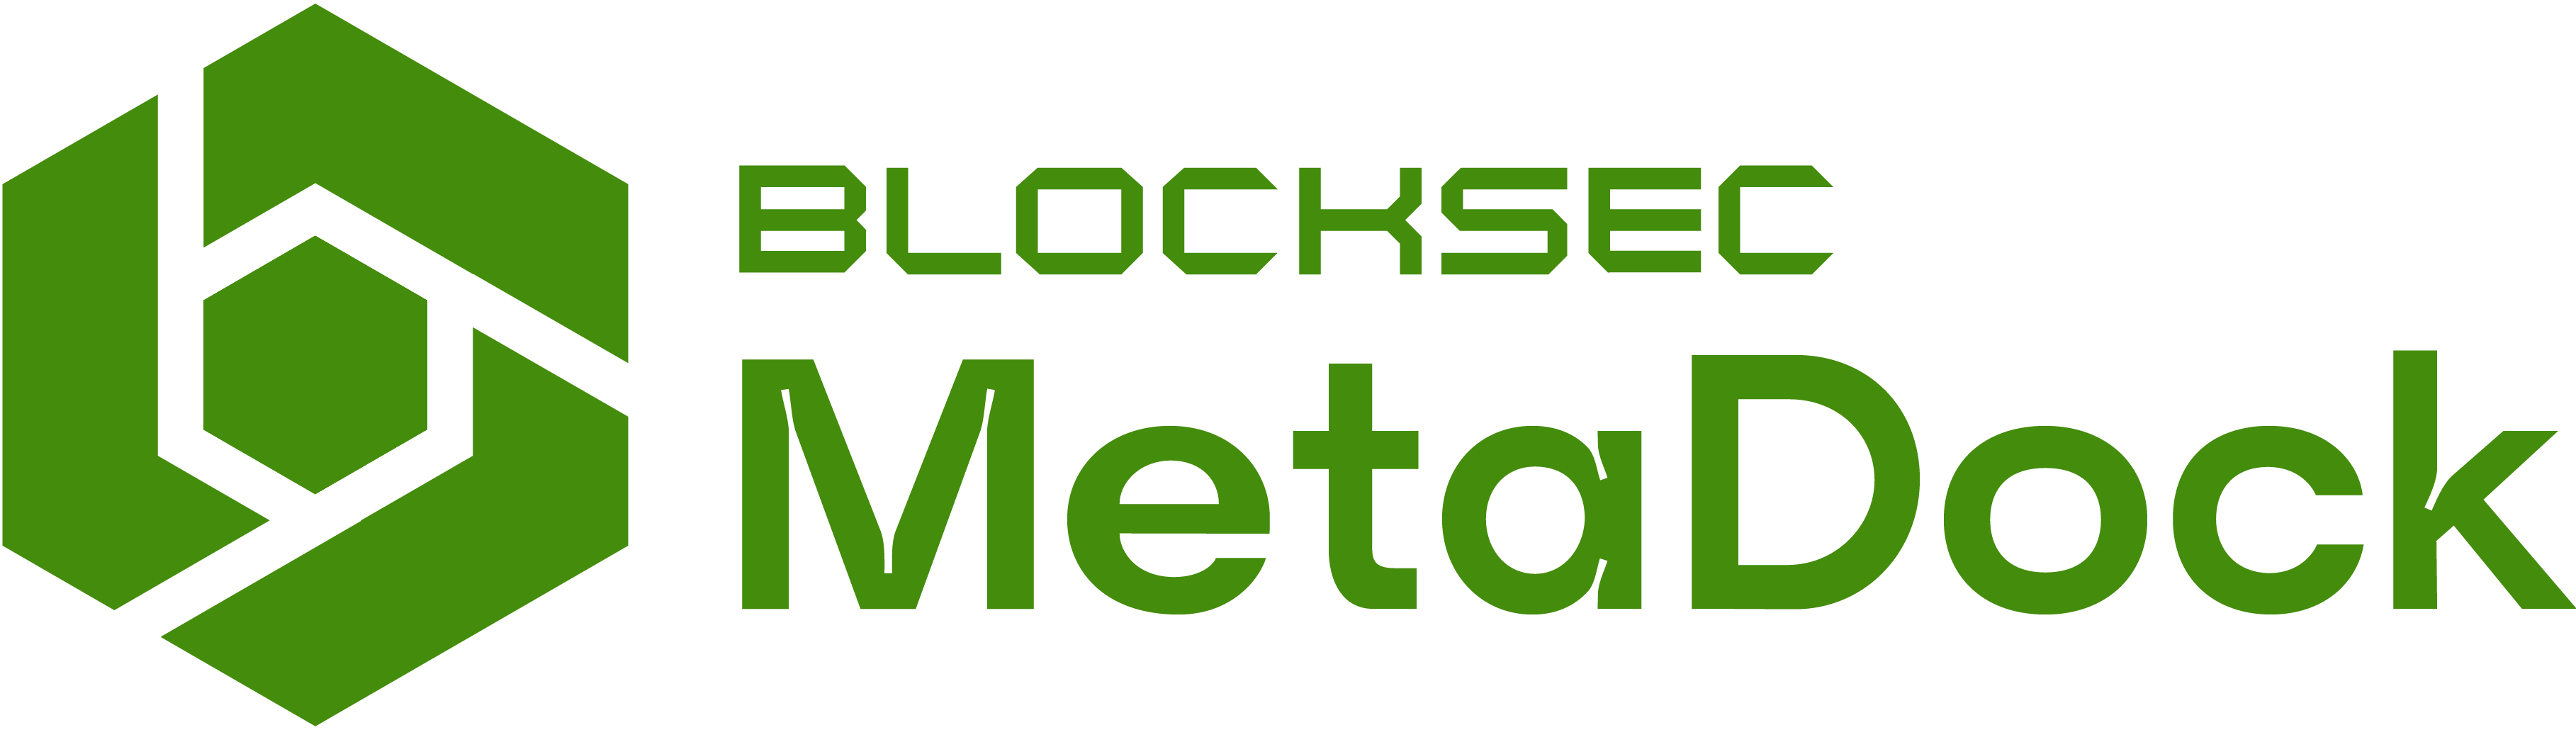 MetaDock-BlockSec